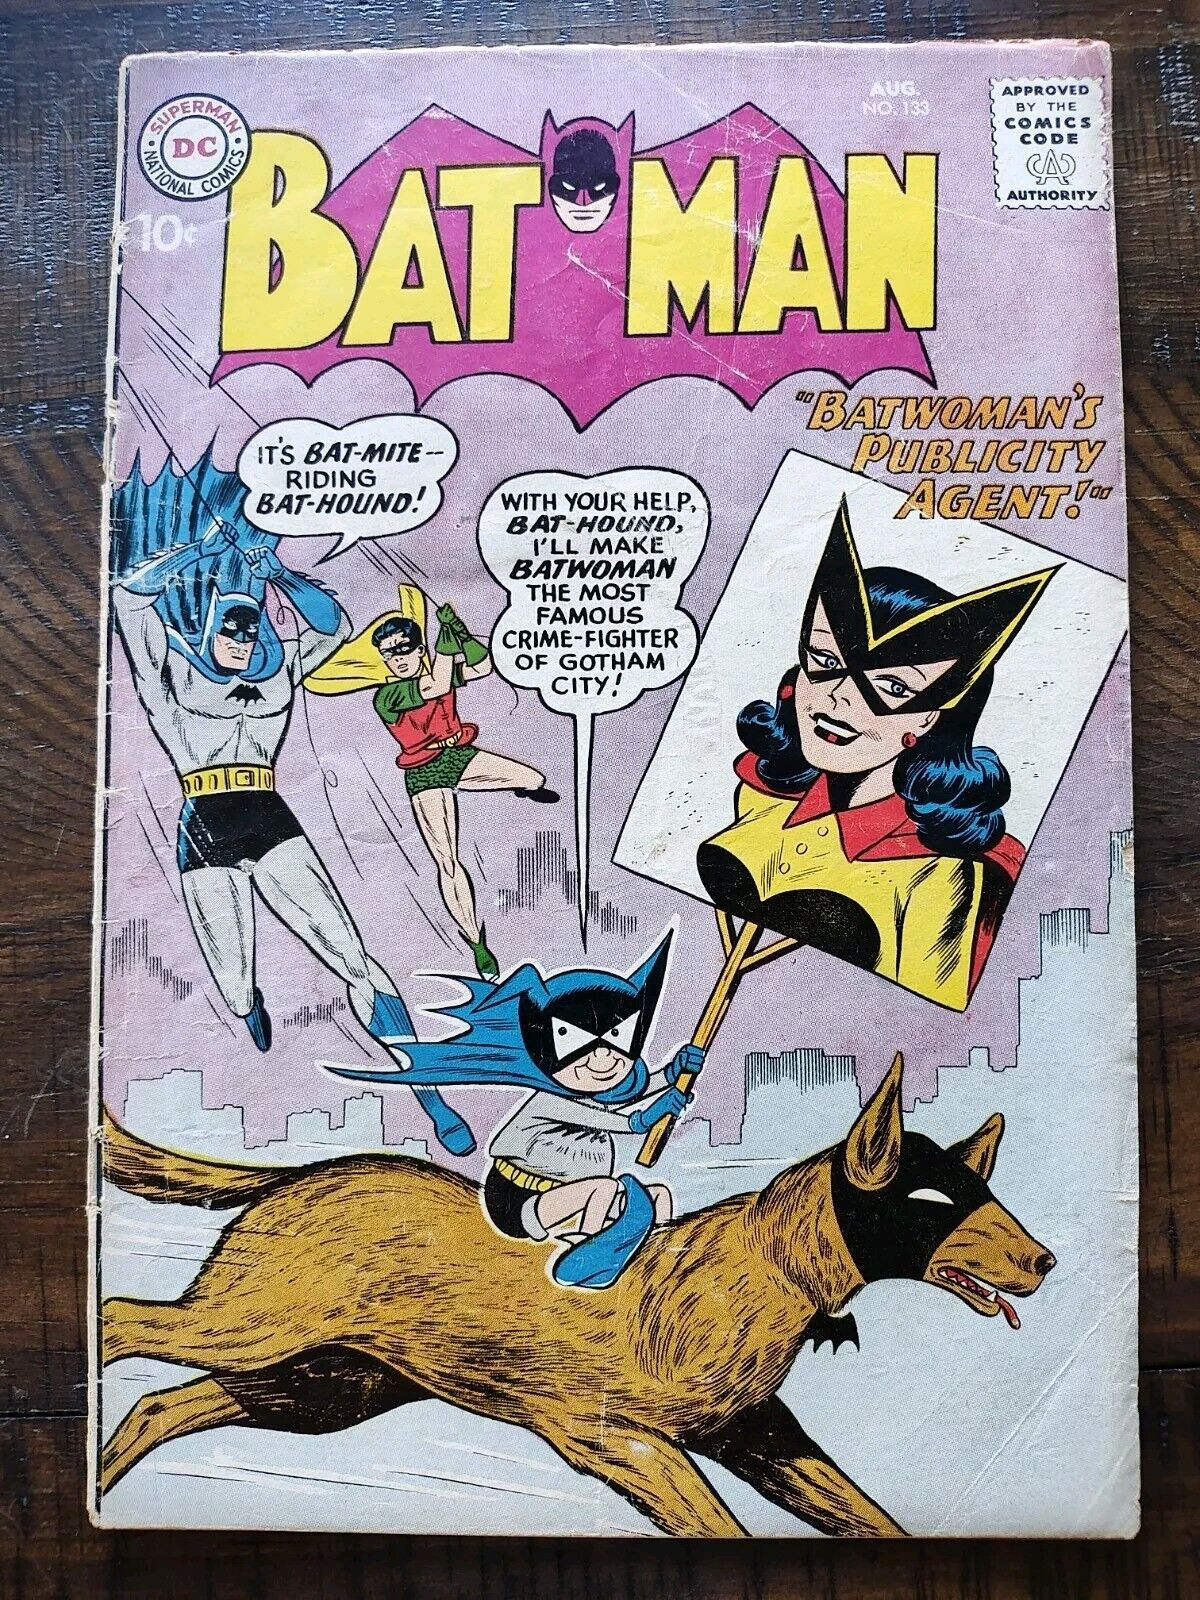 BATMAN #133 1960 DC Key 1st app. BAT-MITE in Title, 1st Kite-Man Hell Yeah